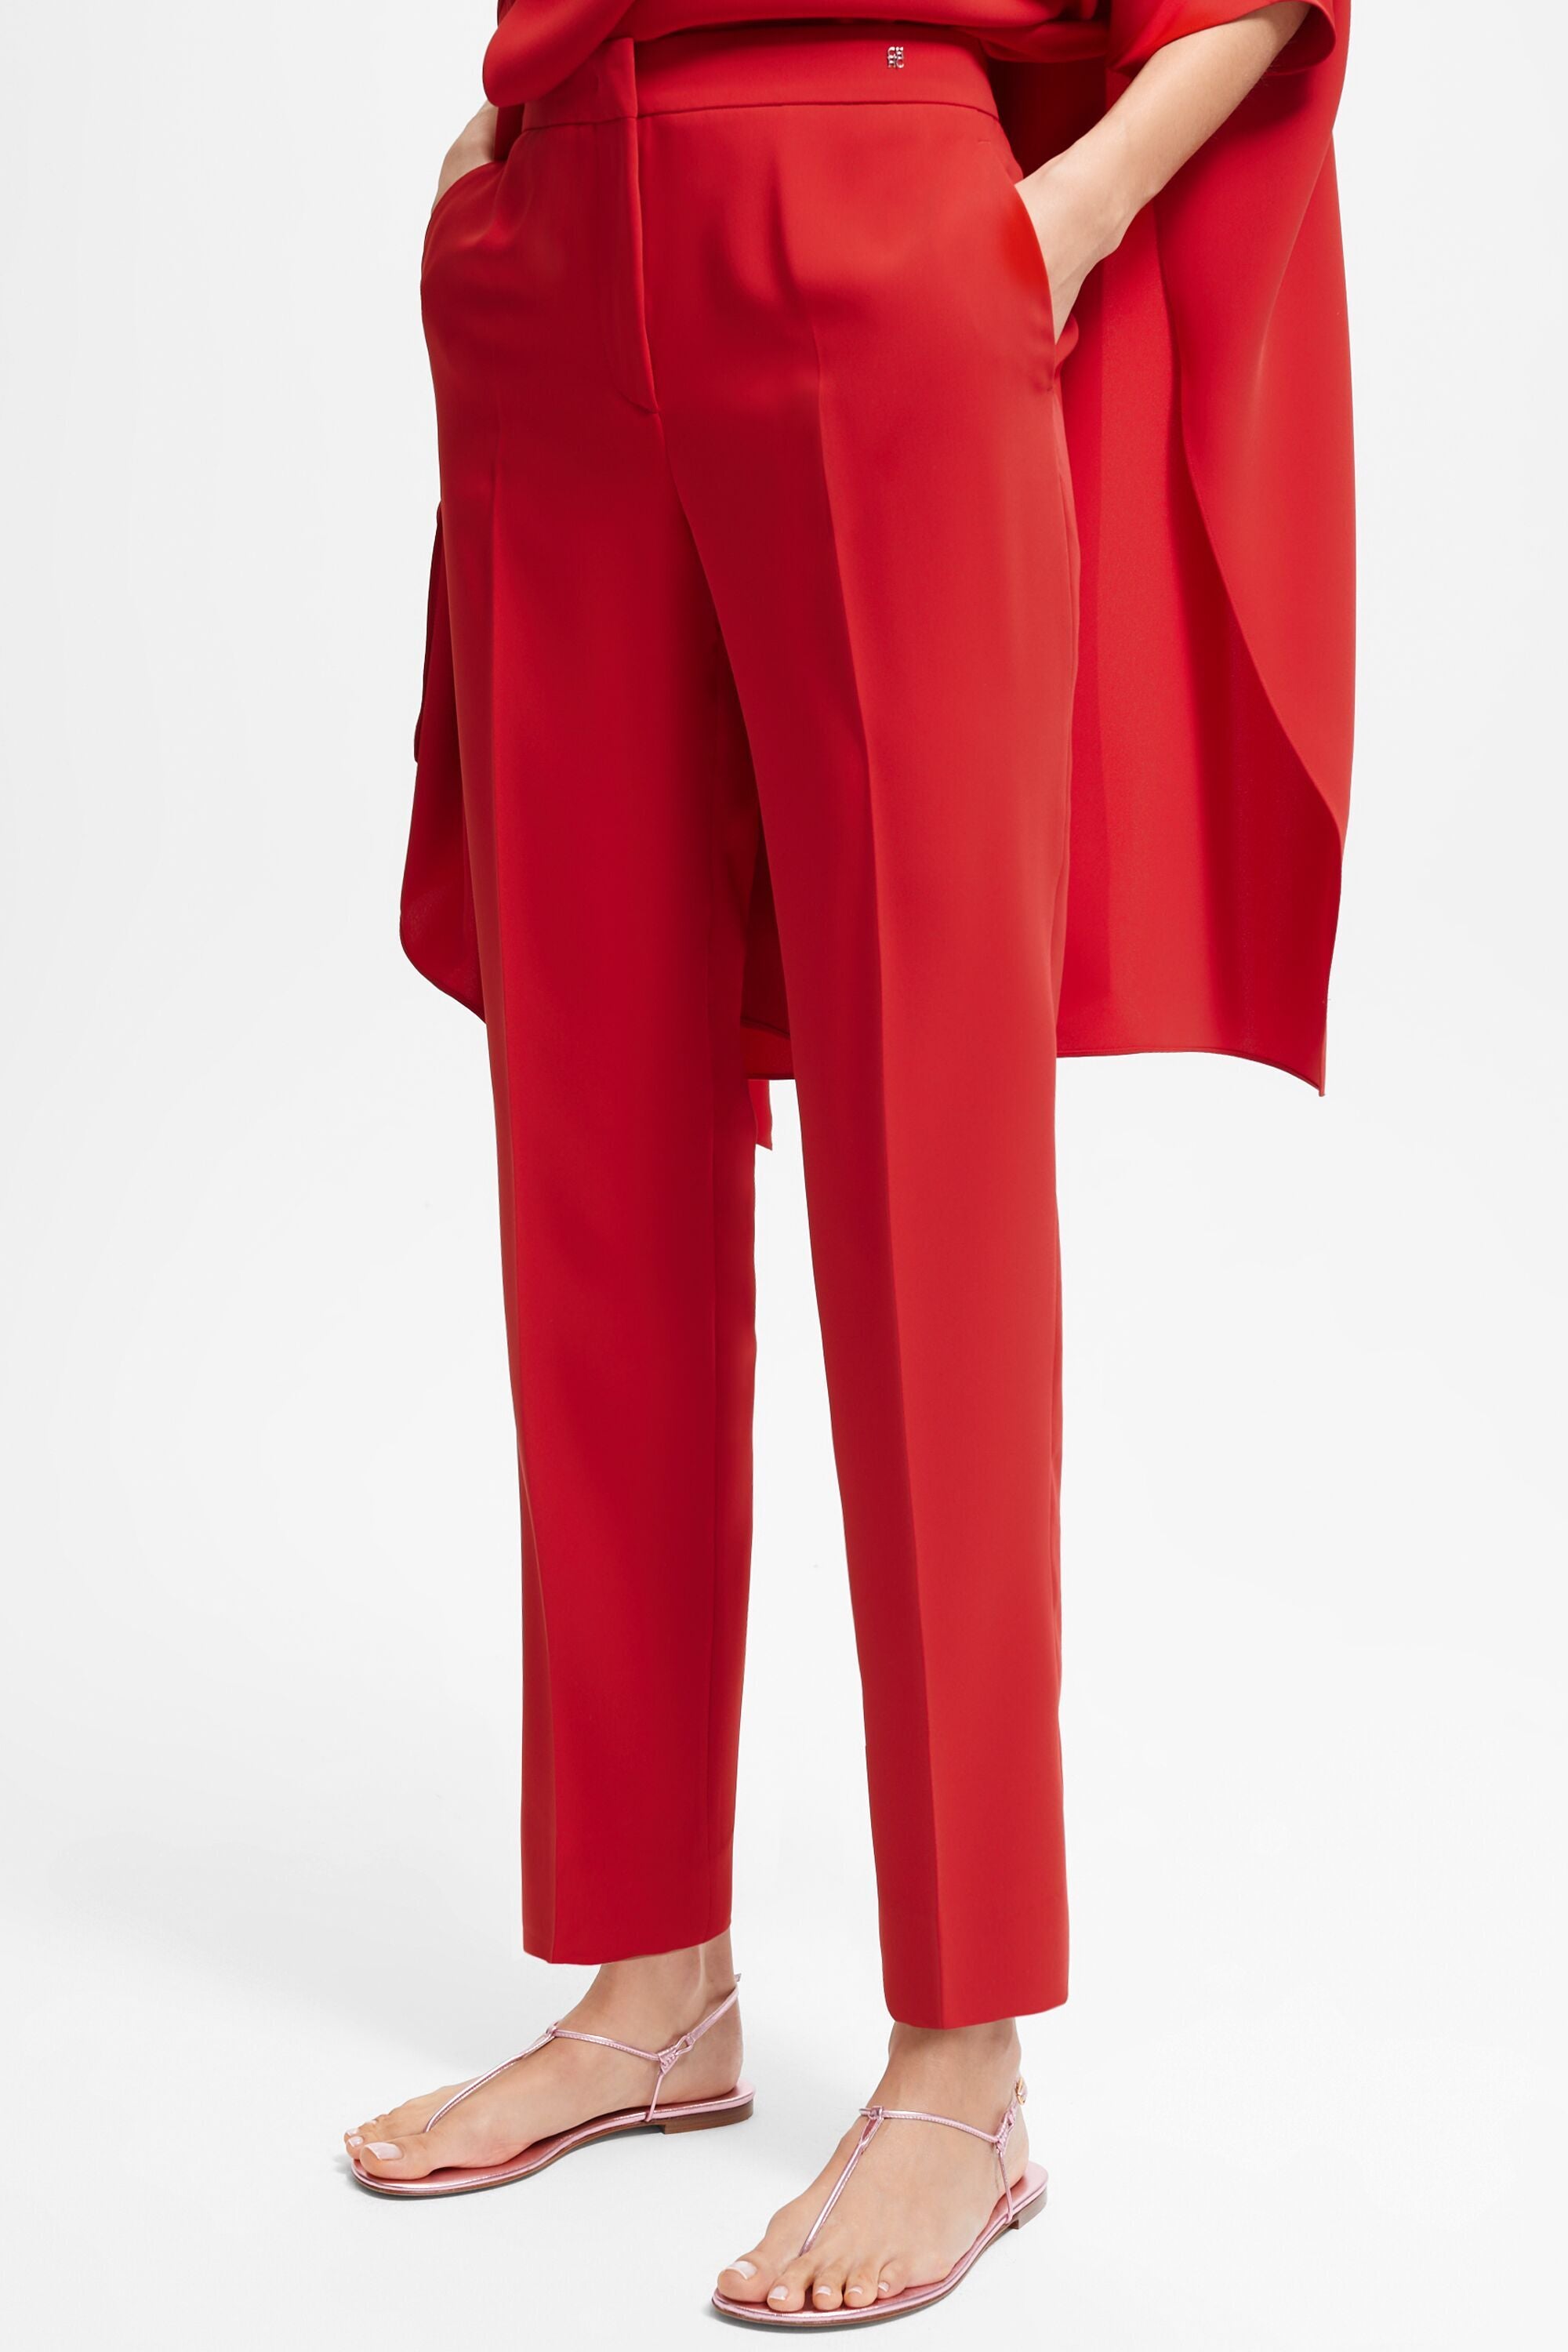 MARKS & SPENCER Slim Fit Women Red Trousers - Buy MARKS & SPENCER Slim Fit Women  Red Trousers Online at Best Prices in India | Flipkart.com